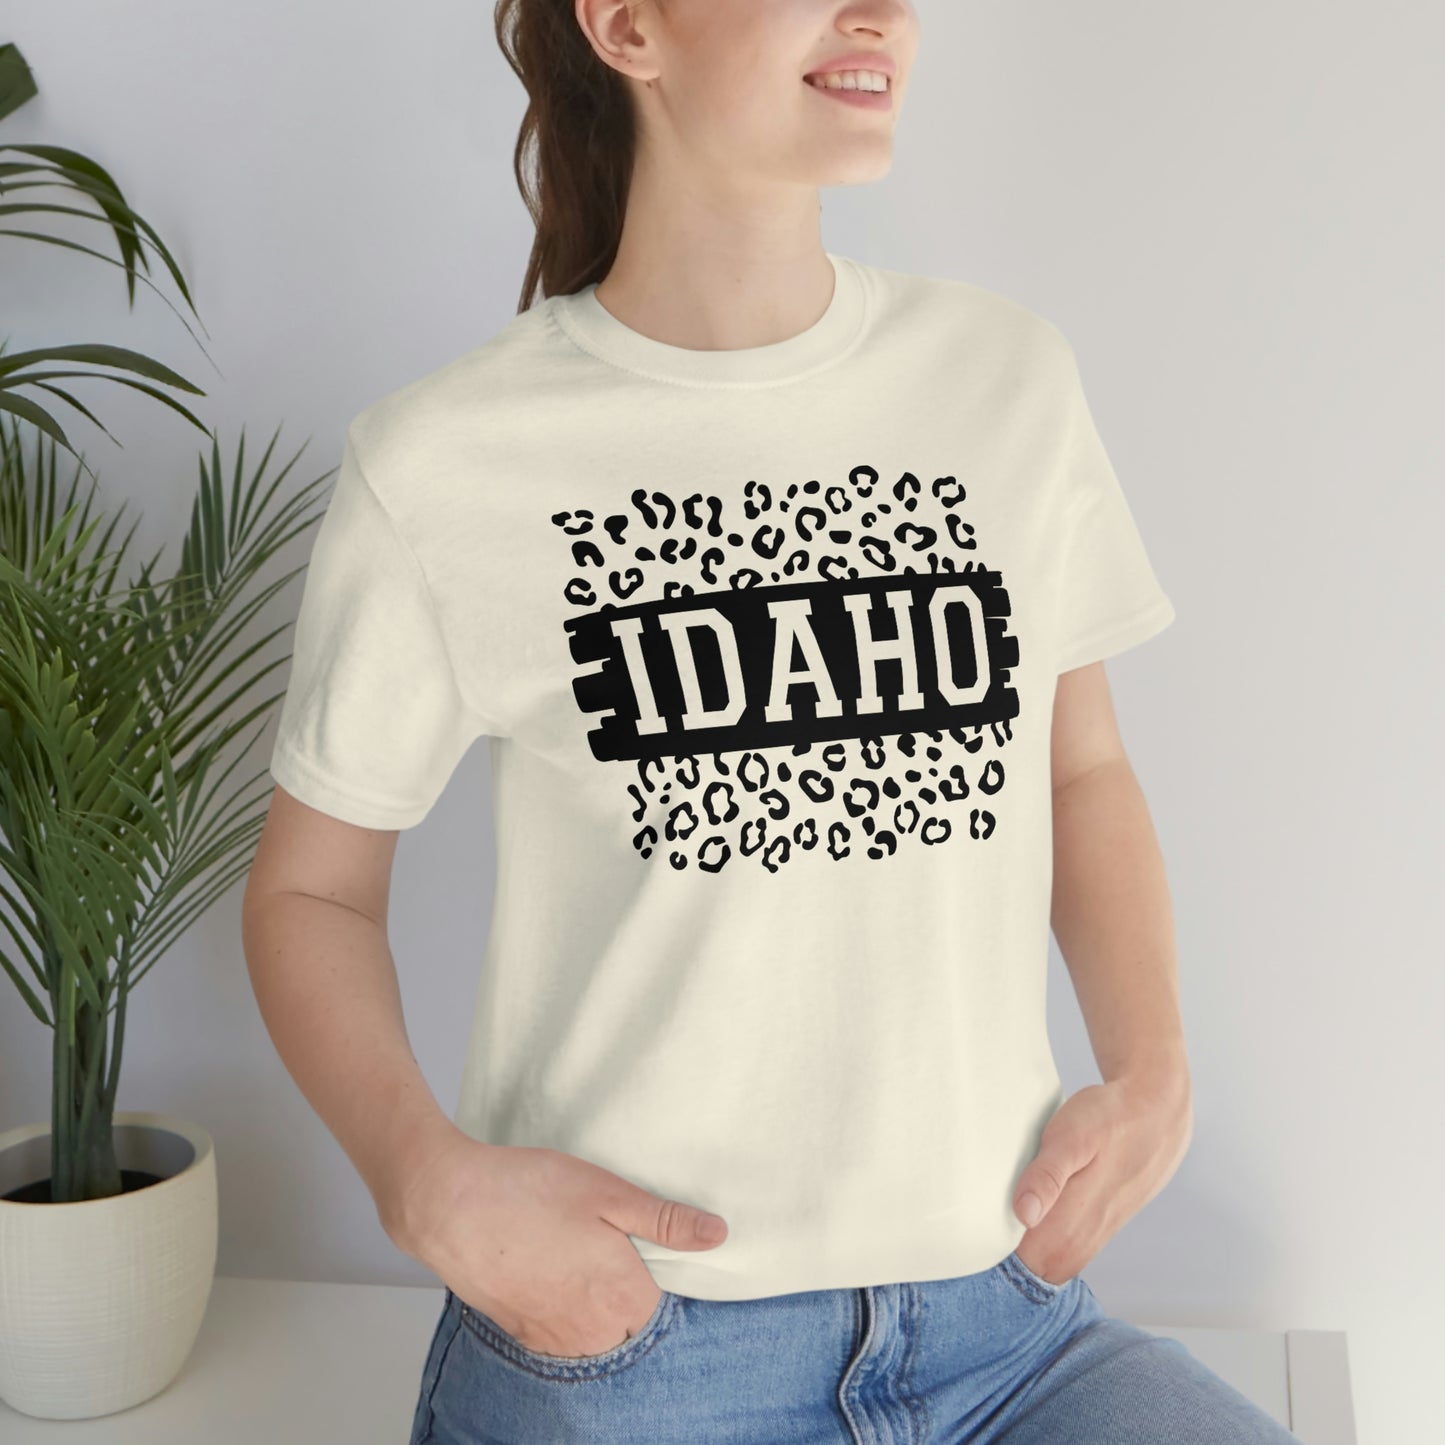 Idaho Leopard Print Background Short Sleeve T-shirt